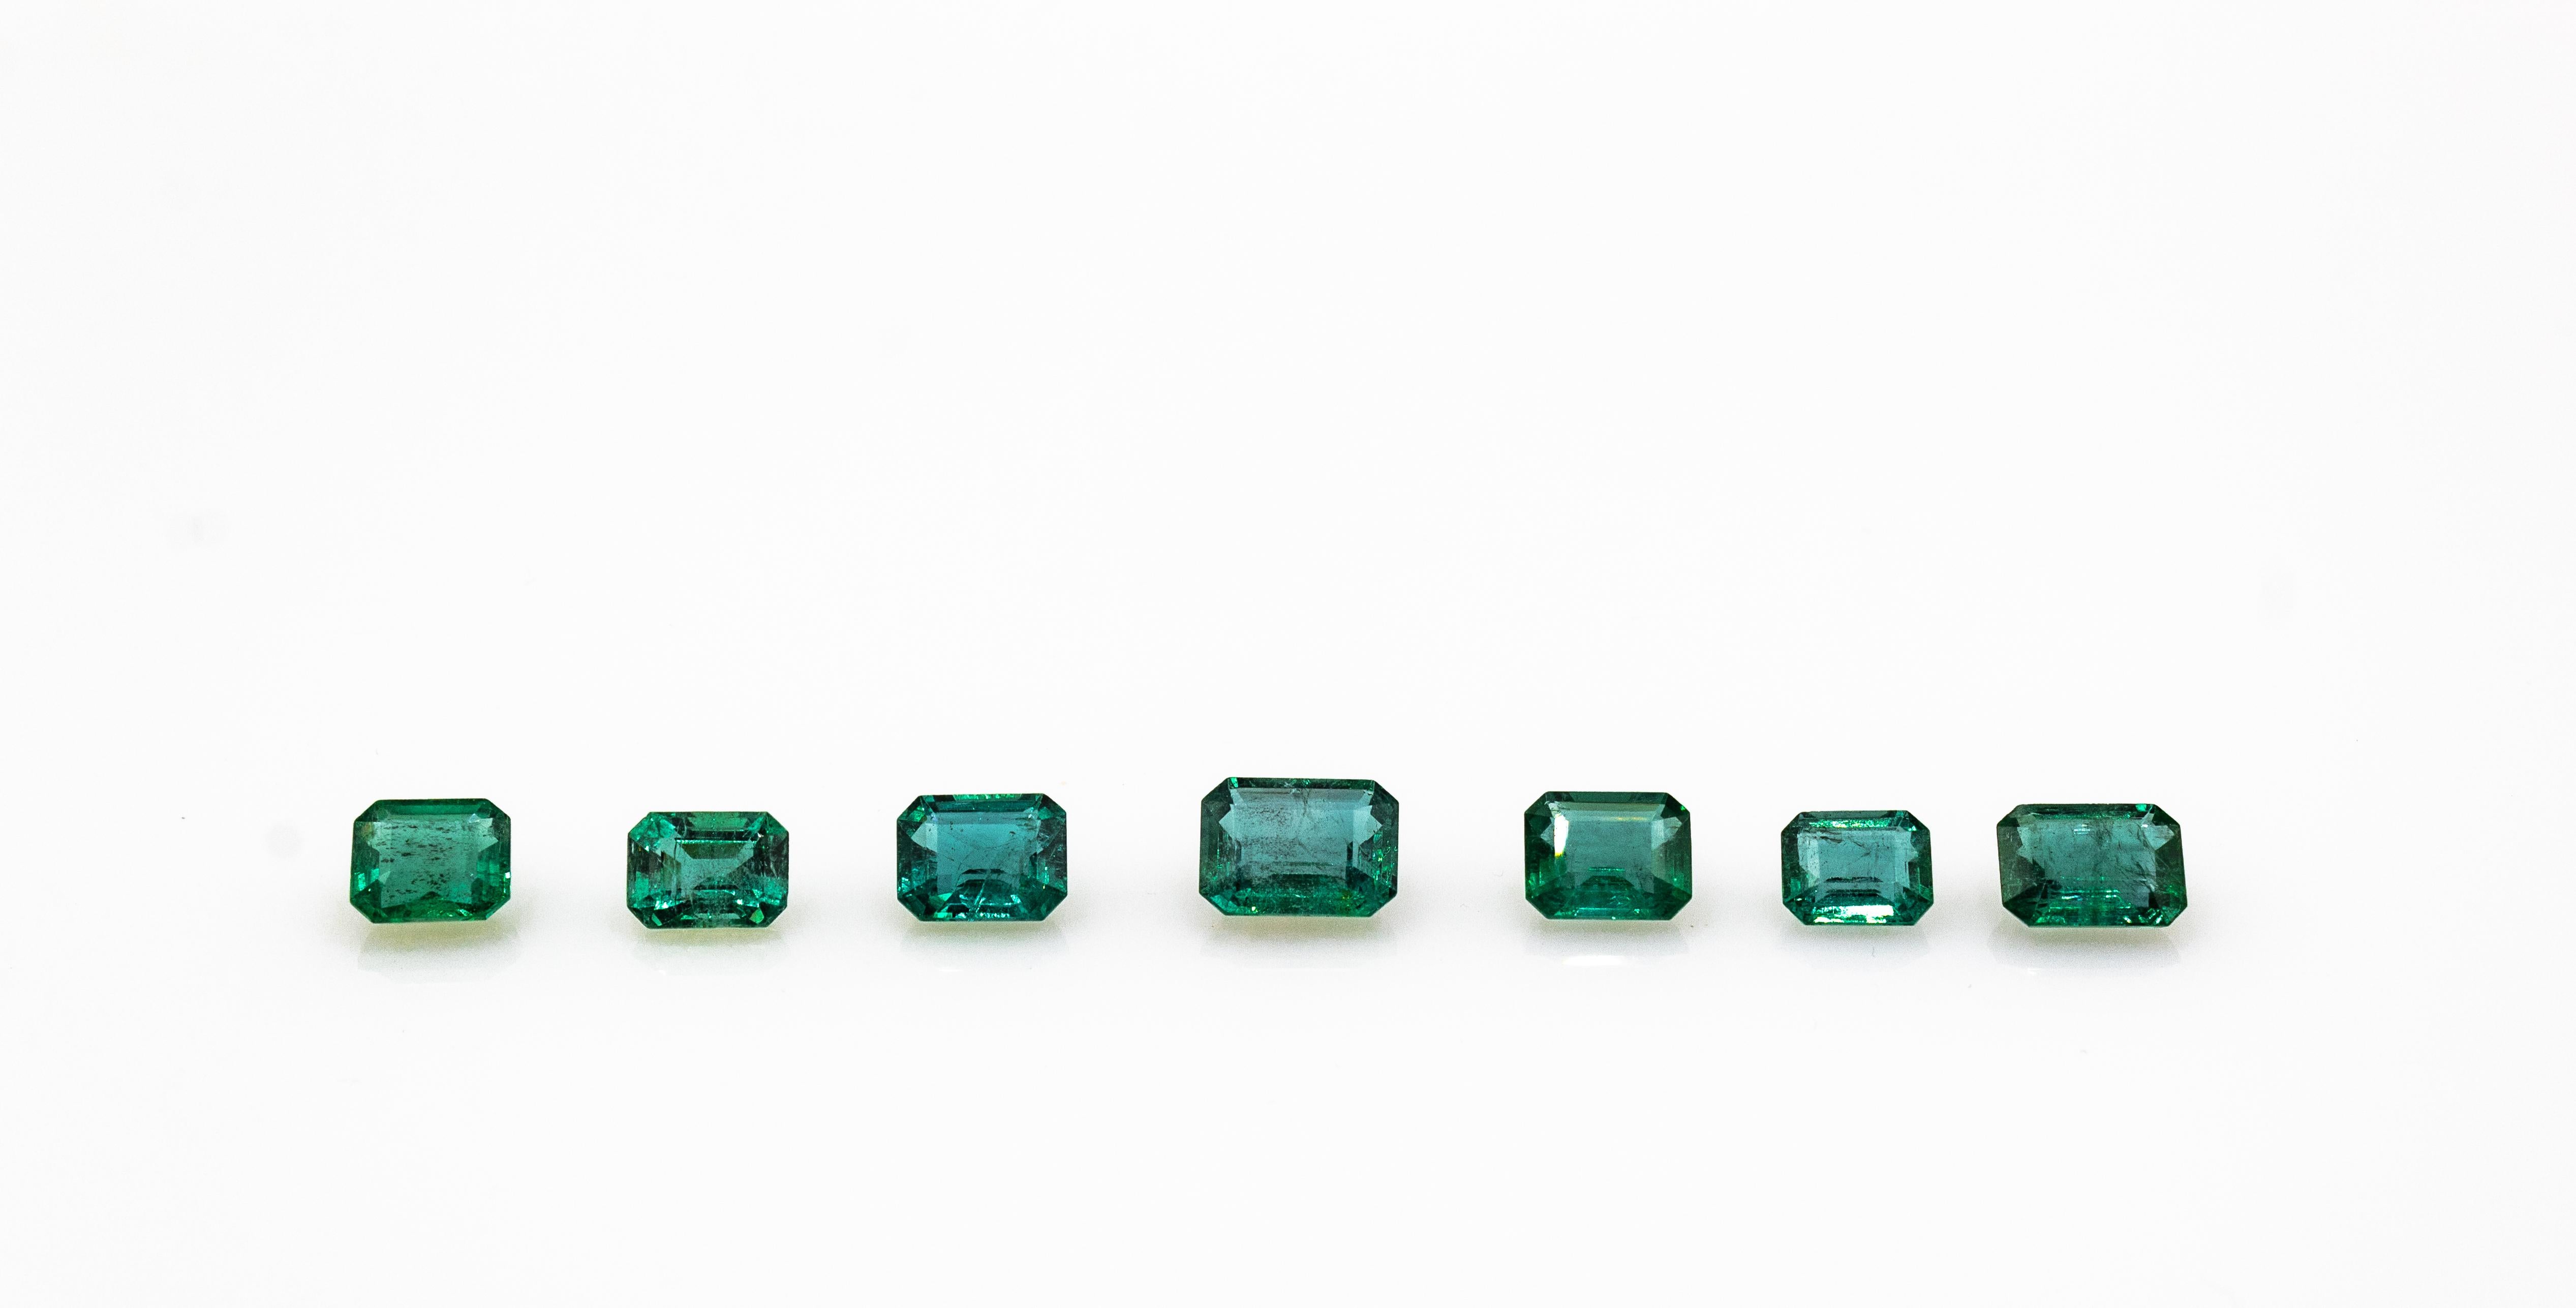 Certifiable Zambia Octagon Cut 4.18 Carat Emerald Loose Gemstone 1